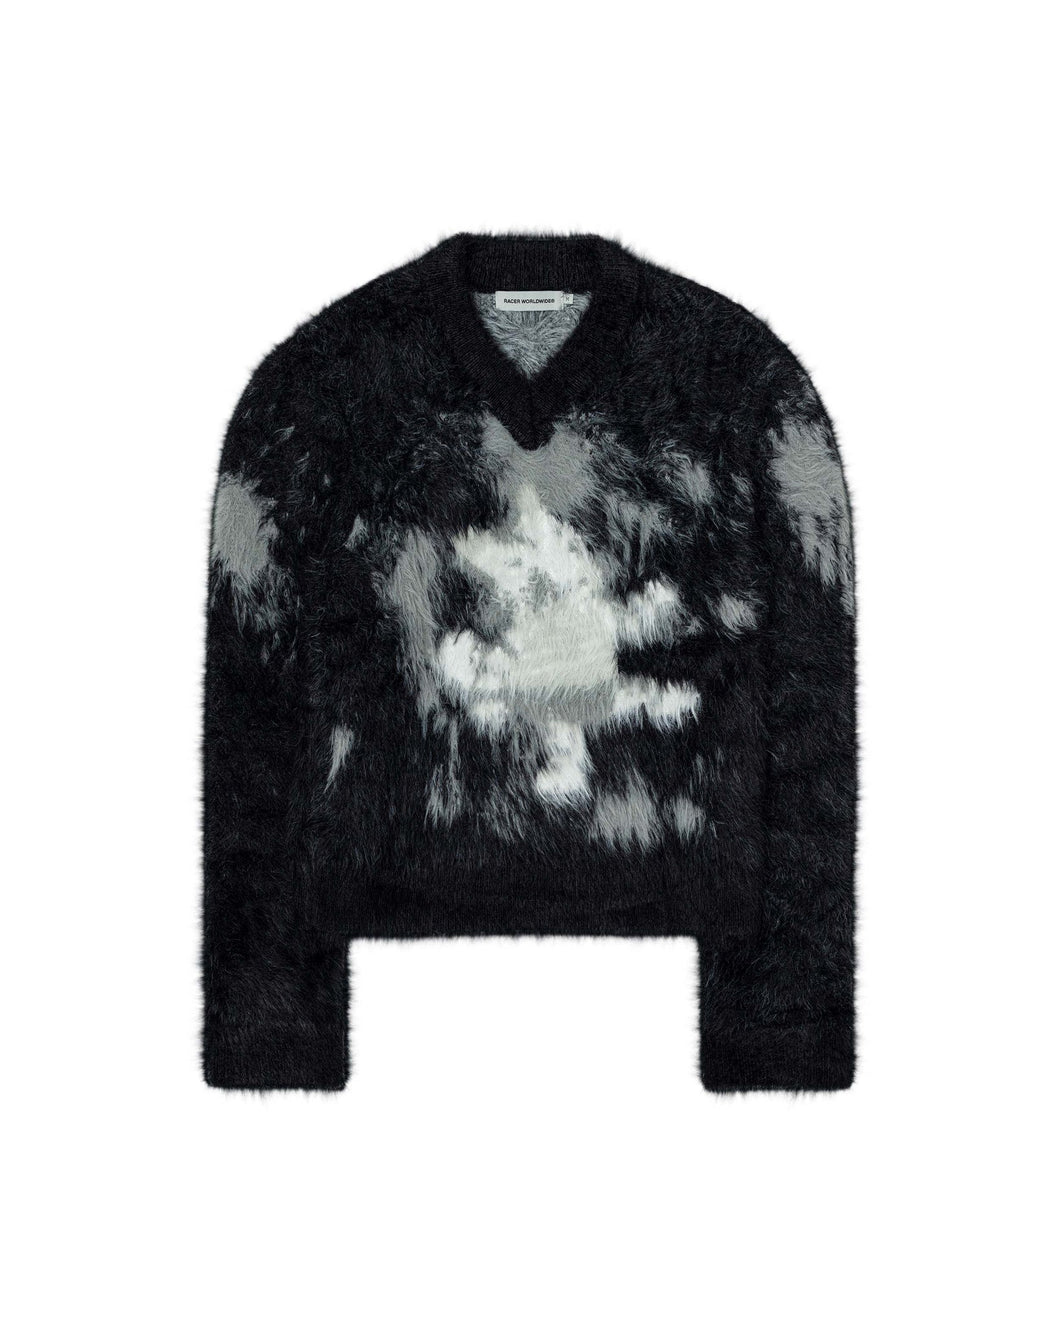 Black Furry Cat Sweater